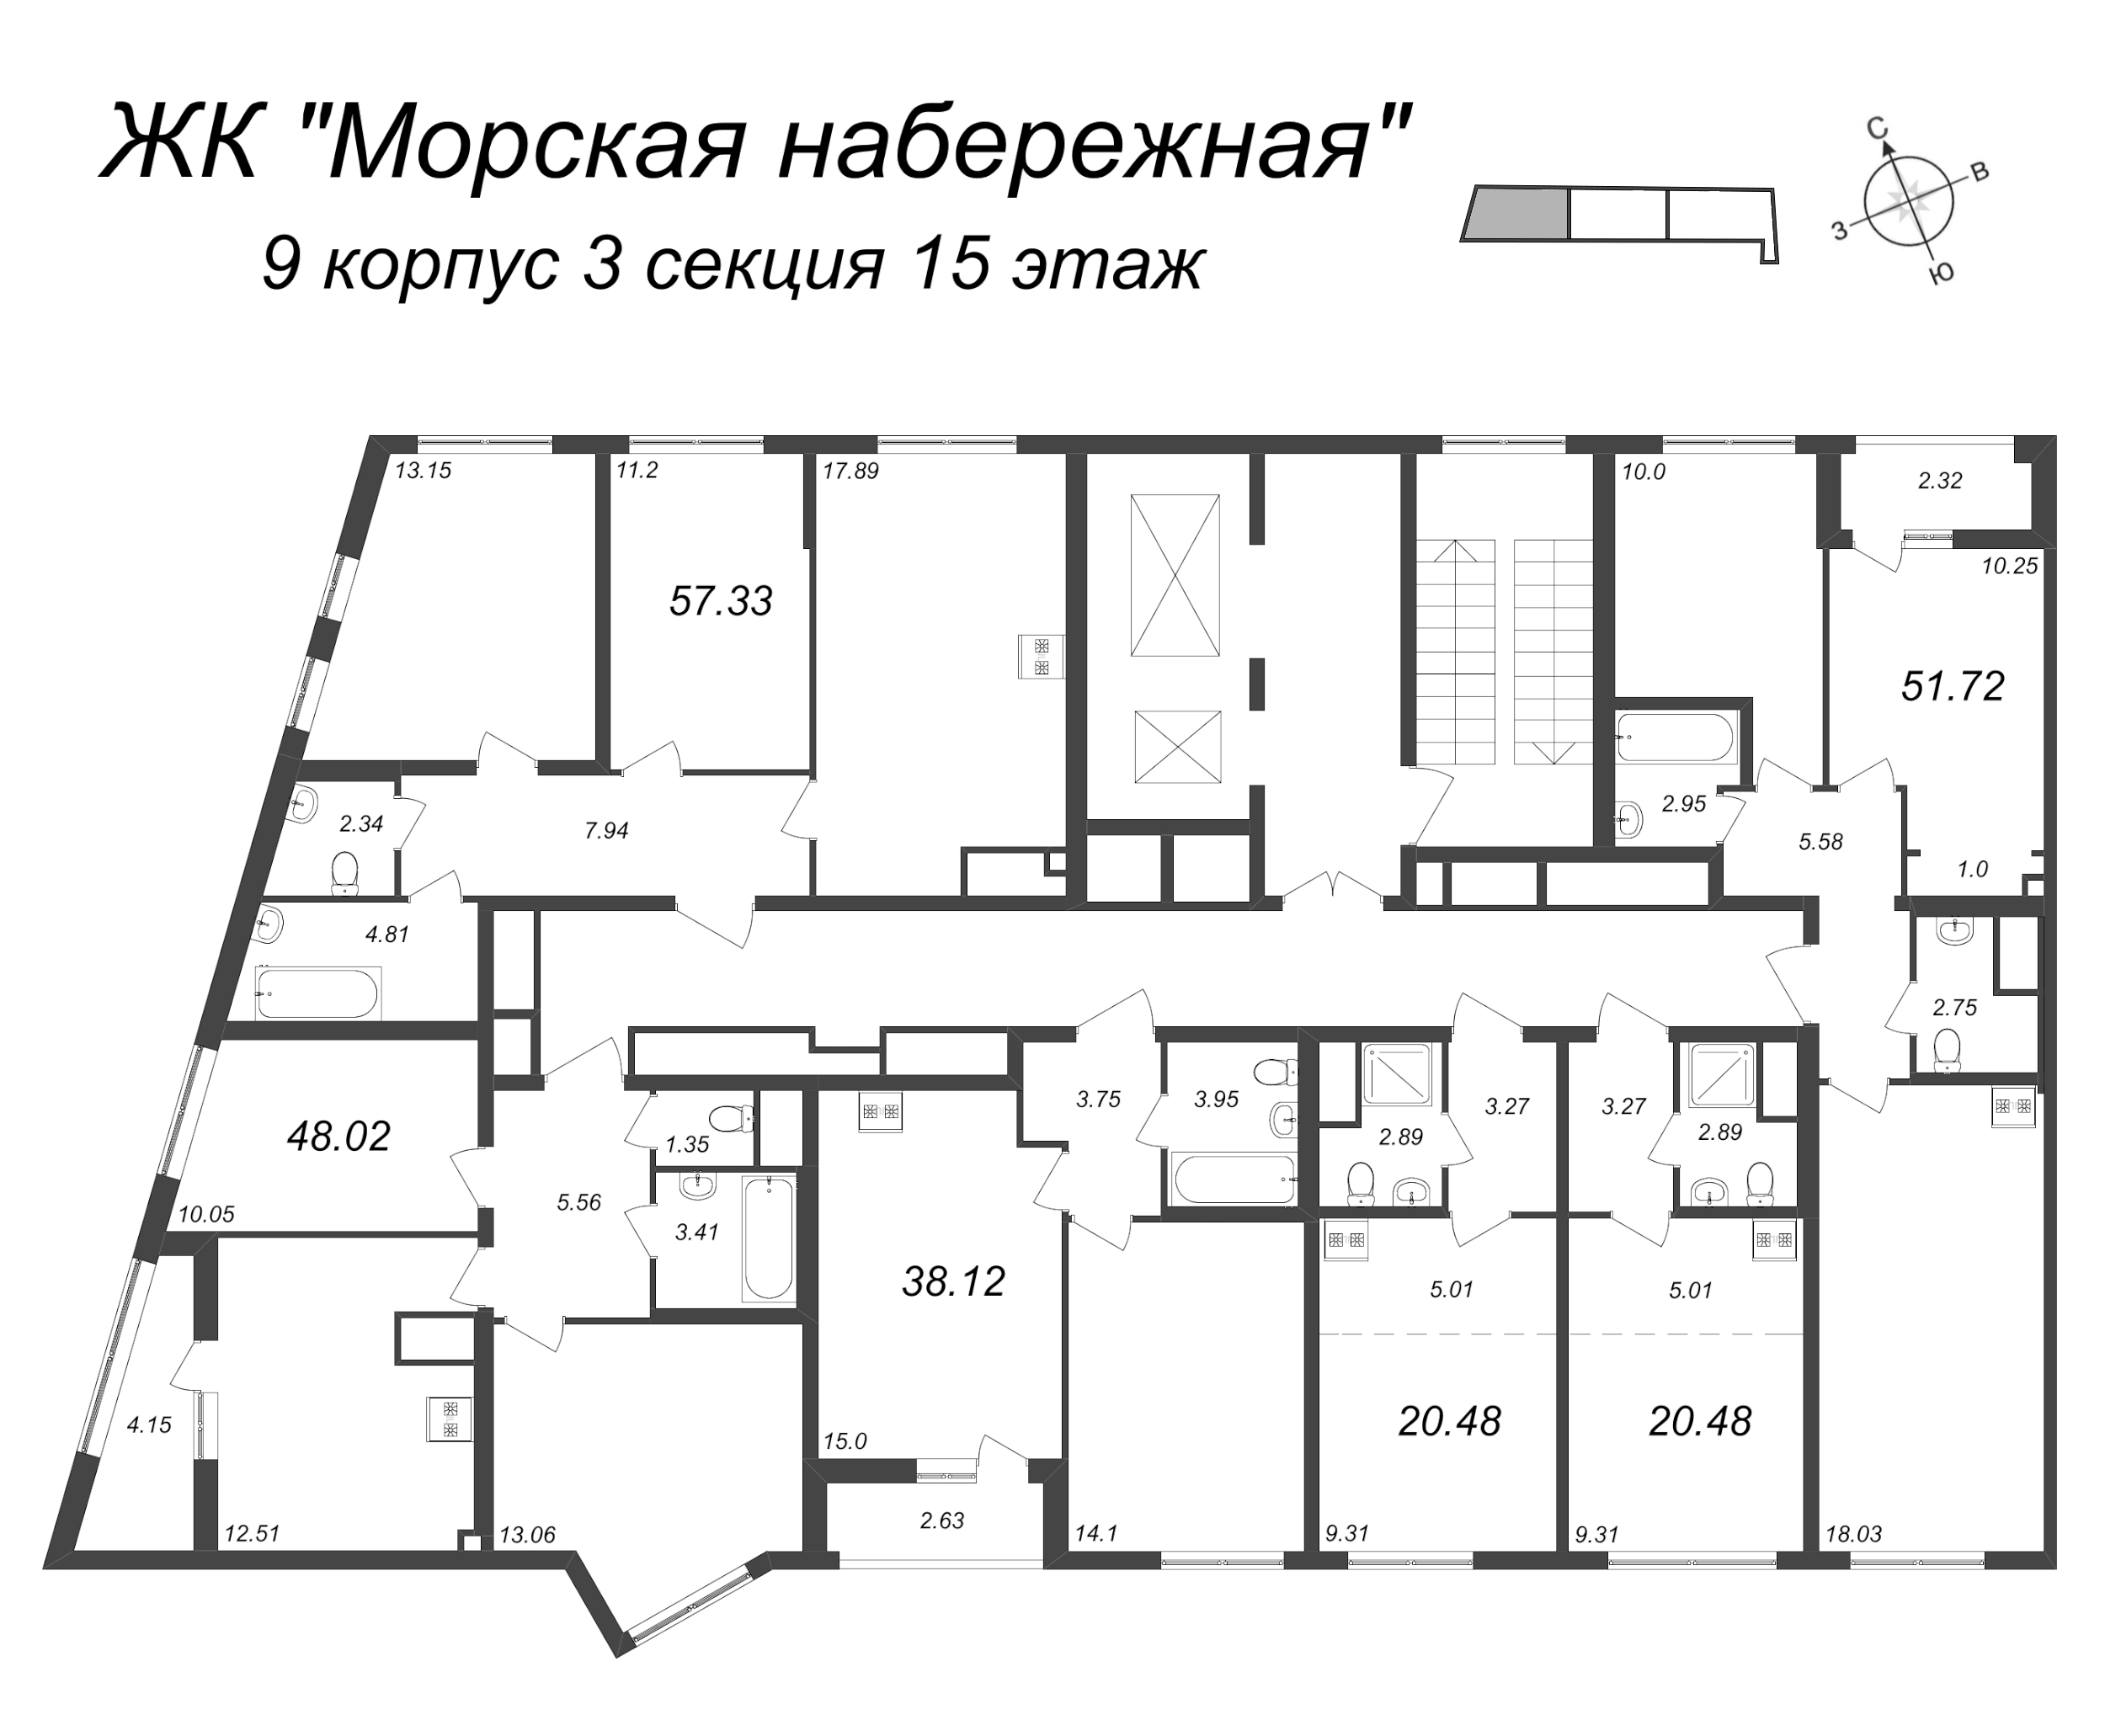 3-комнатная (Евро) квартира, 51.72 м² - планировка этажа